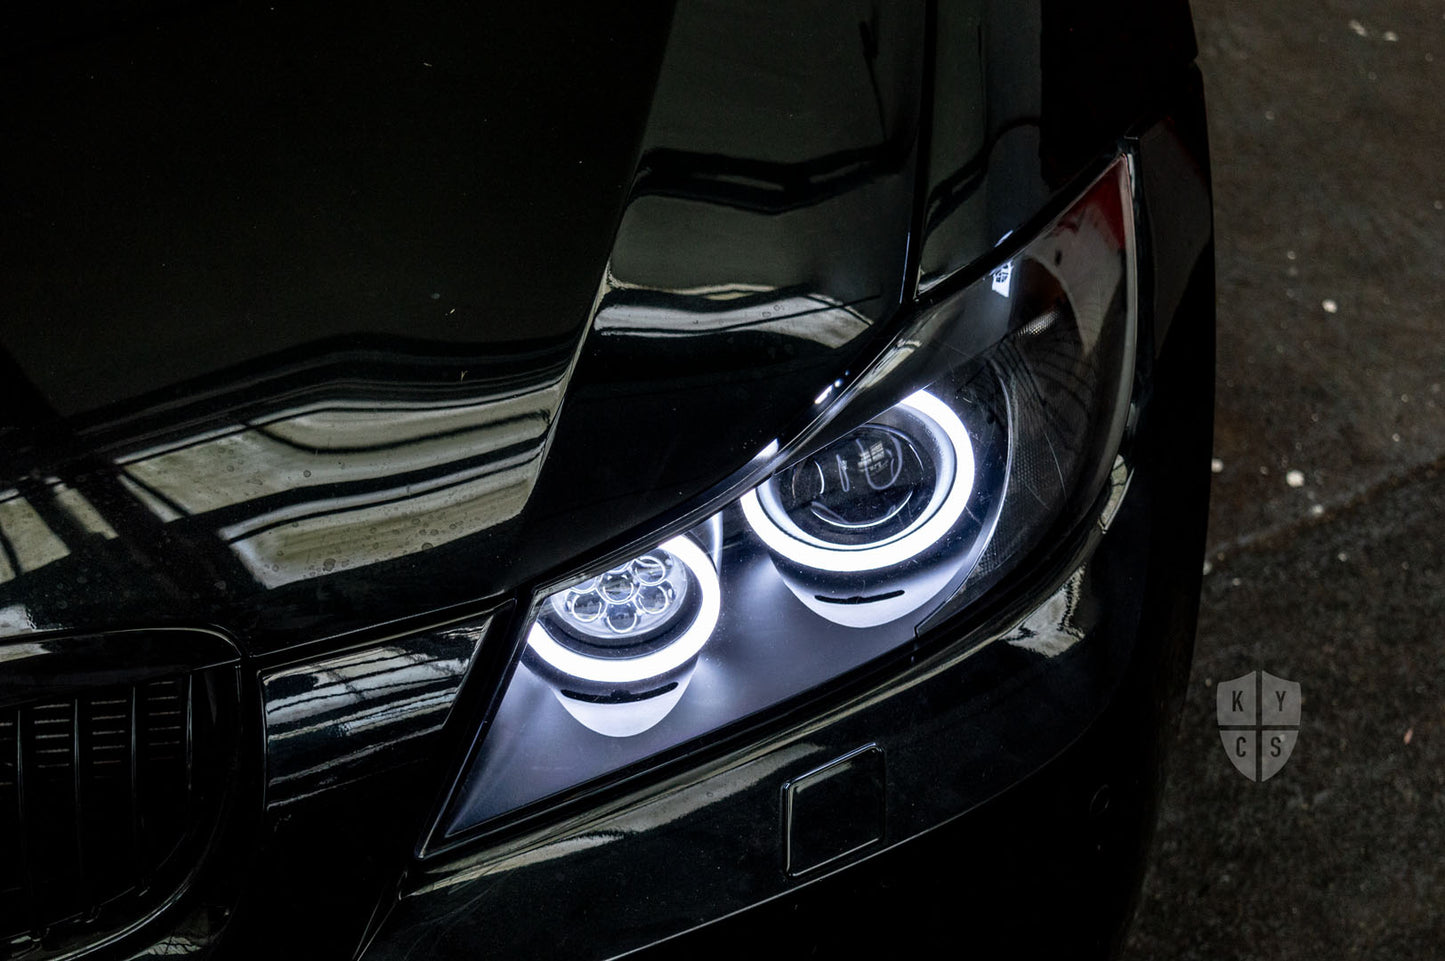 Headlight options on the above vehicle: KYCS (white) angel eyes | Classic blackout | Upgraded high beam (high beam LED unit array style) | New headlight plastic lenses/covers | LED indicators